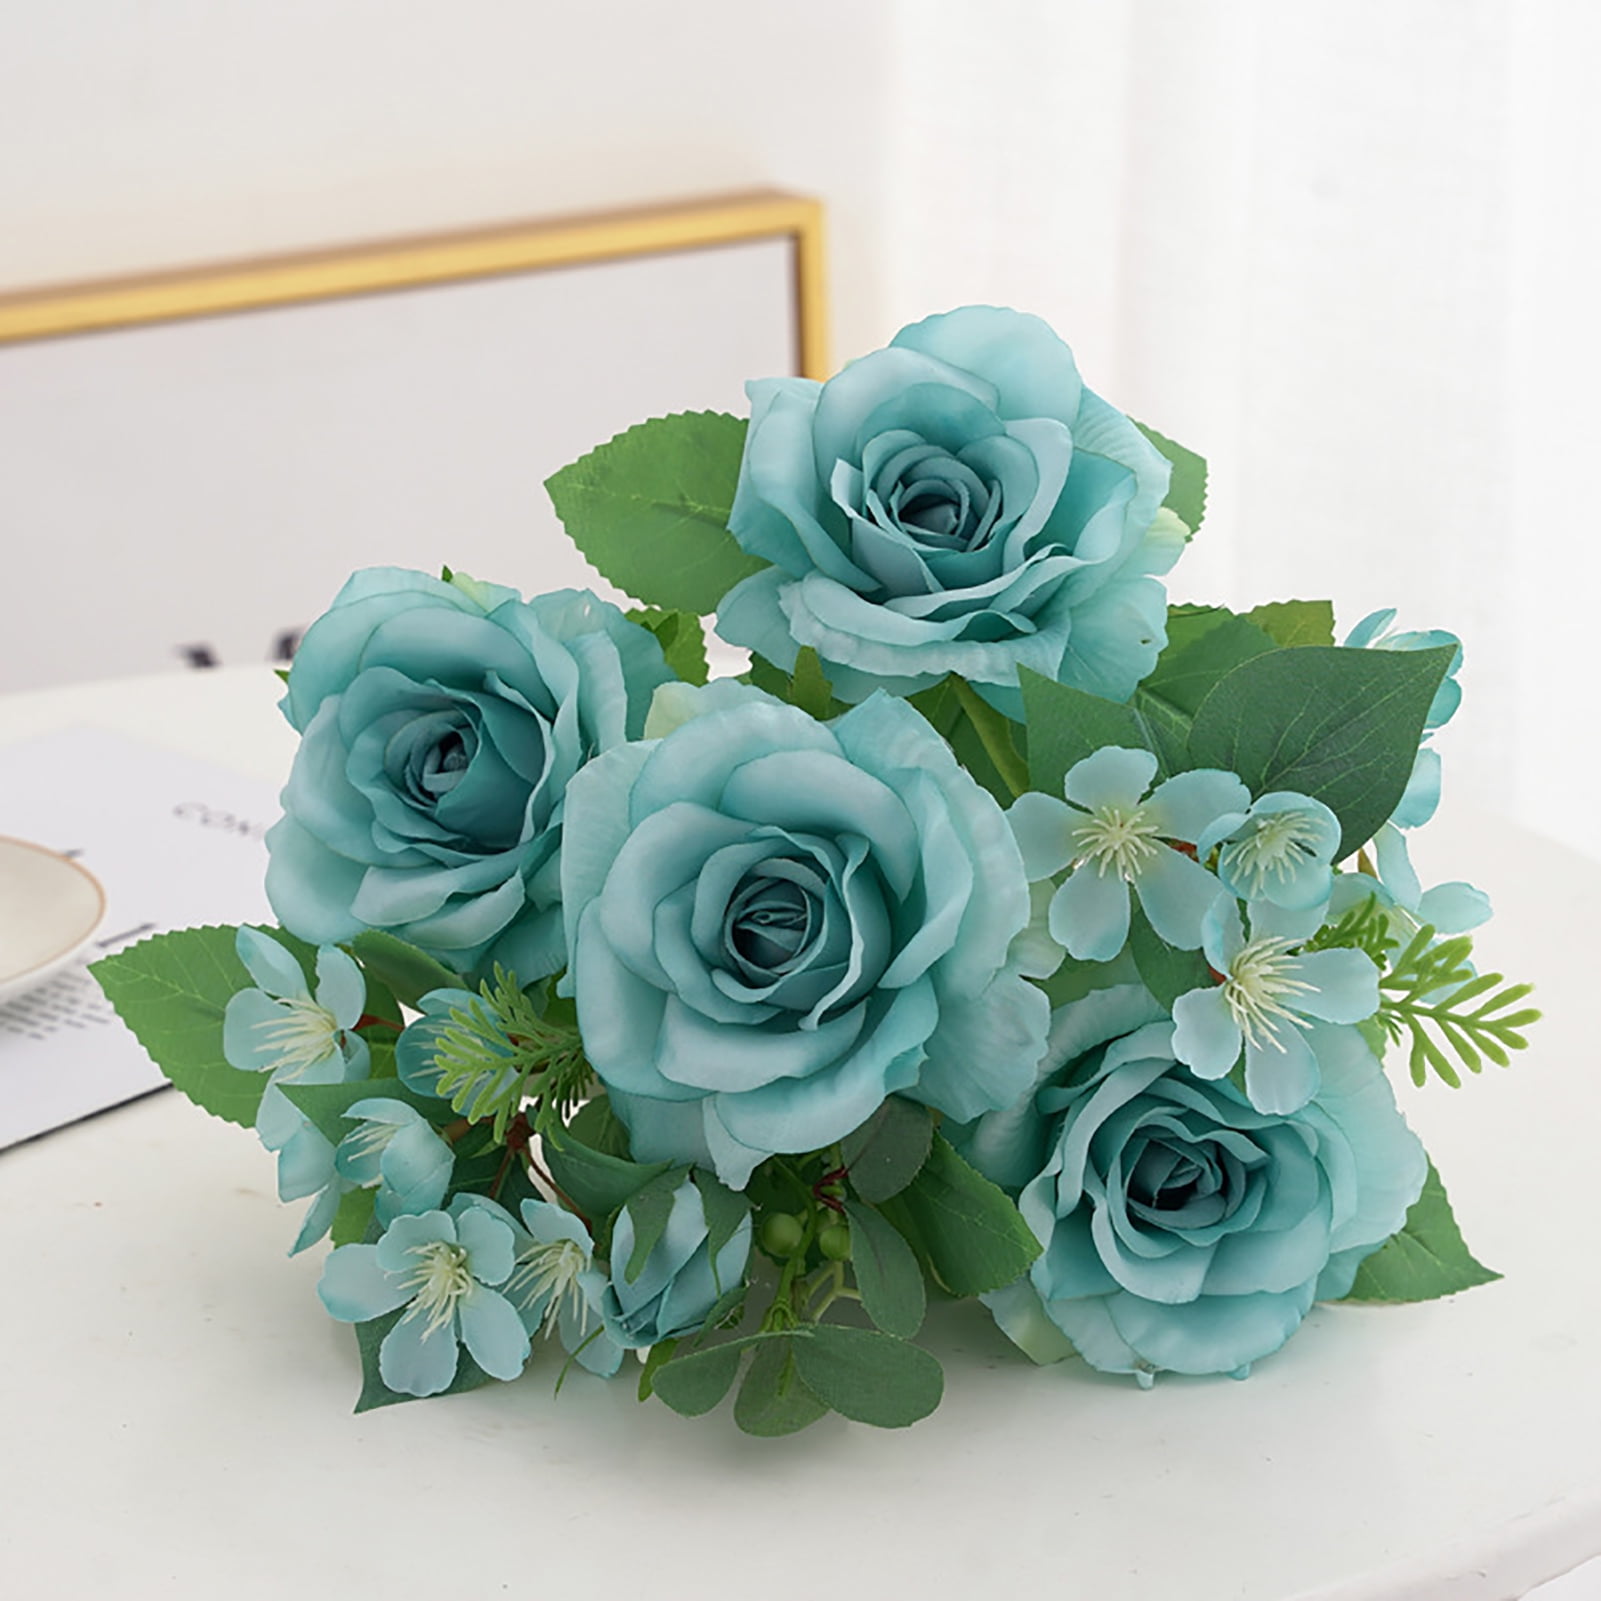 Details about   5 Head Artificial Silk Fake Large Rose Flower Hydrangea Wedding Venue Decors 